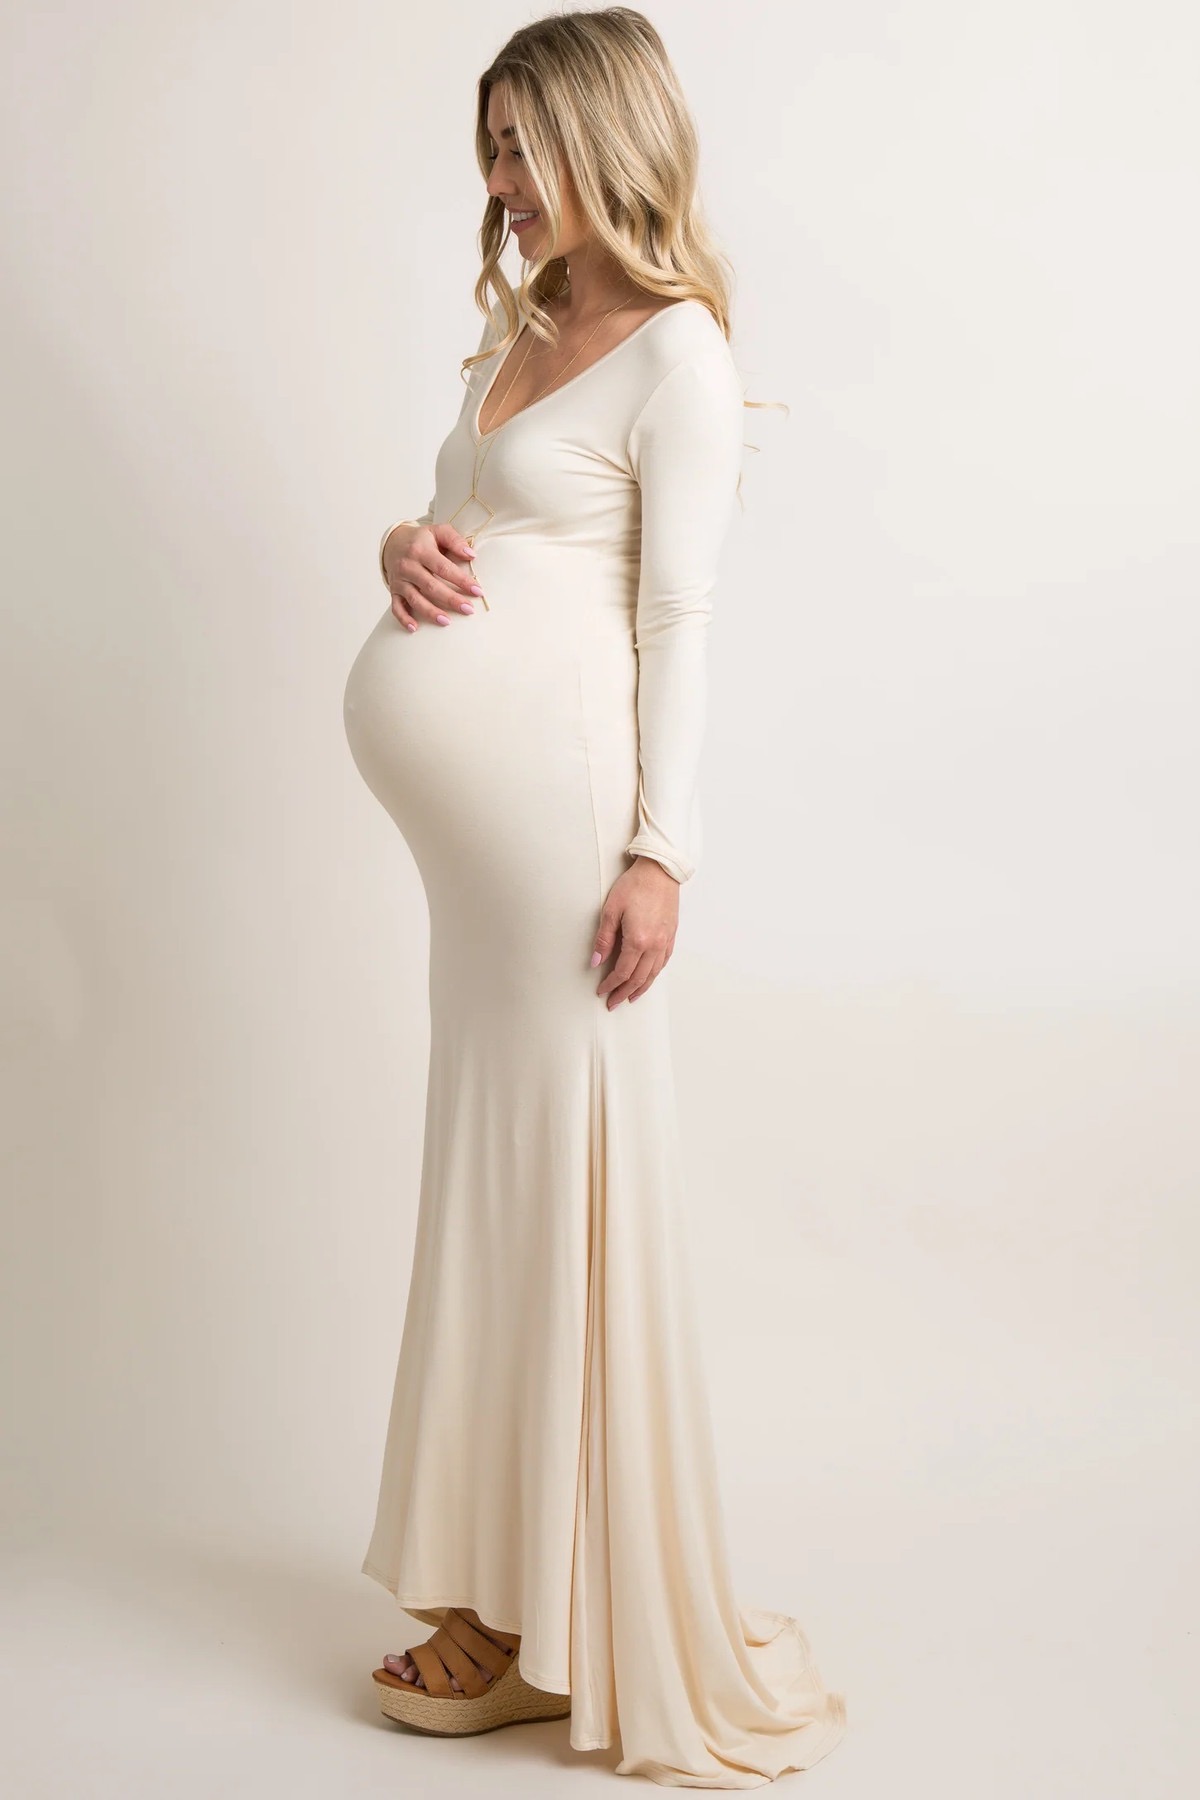 cream maternity dress for photoshoot